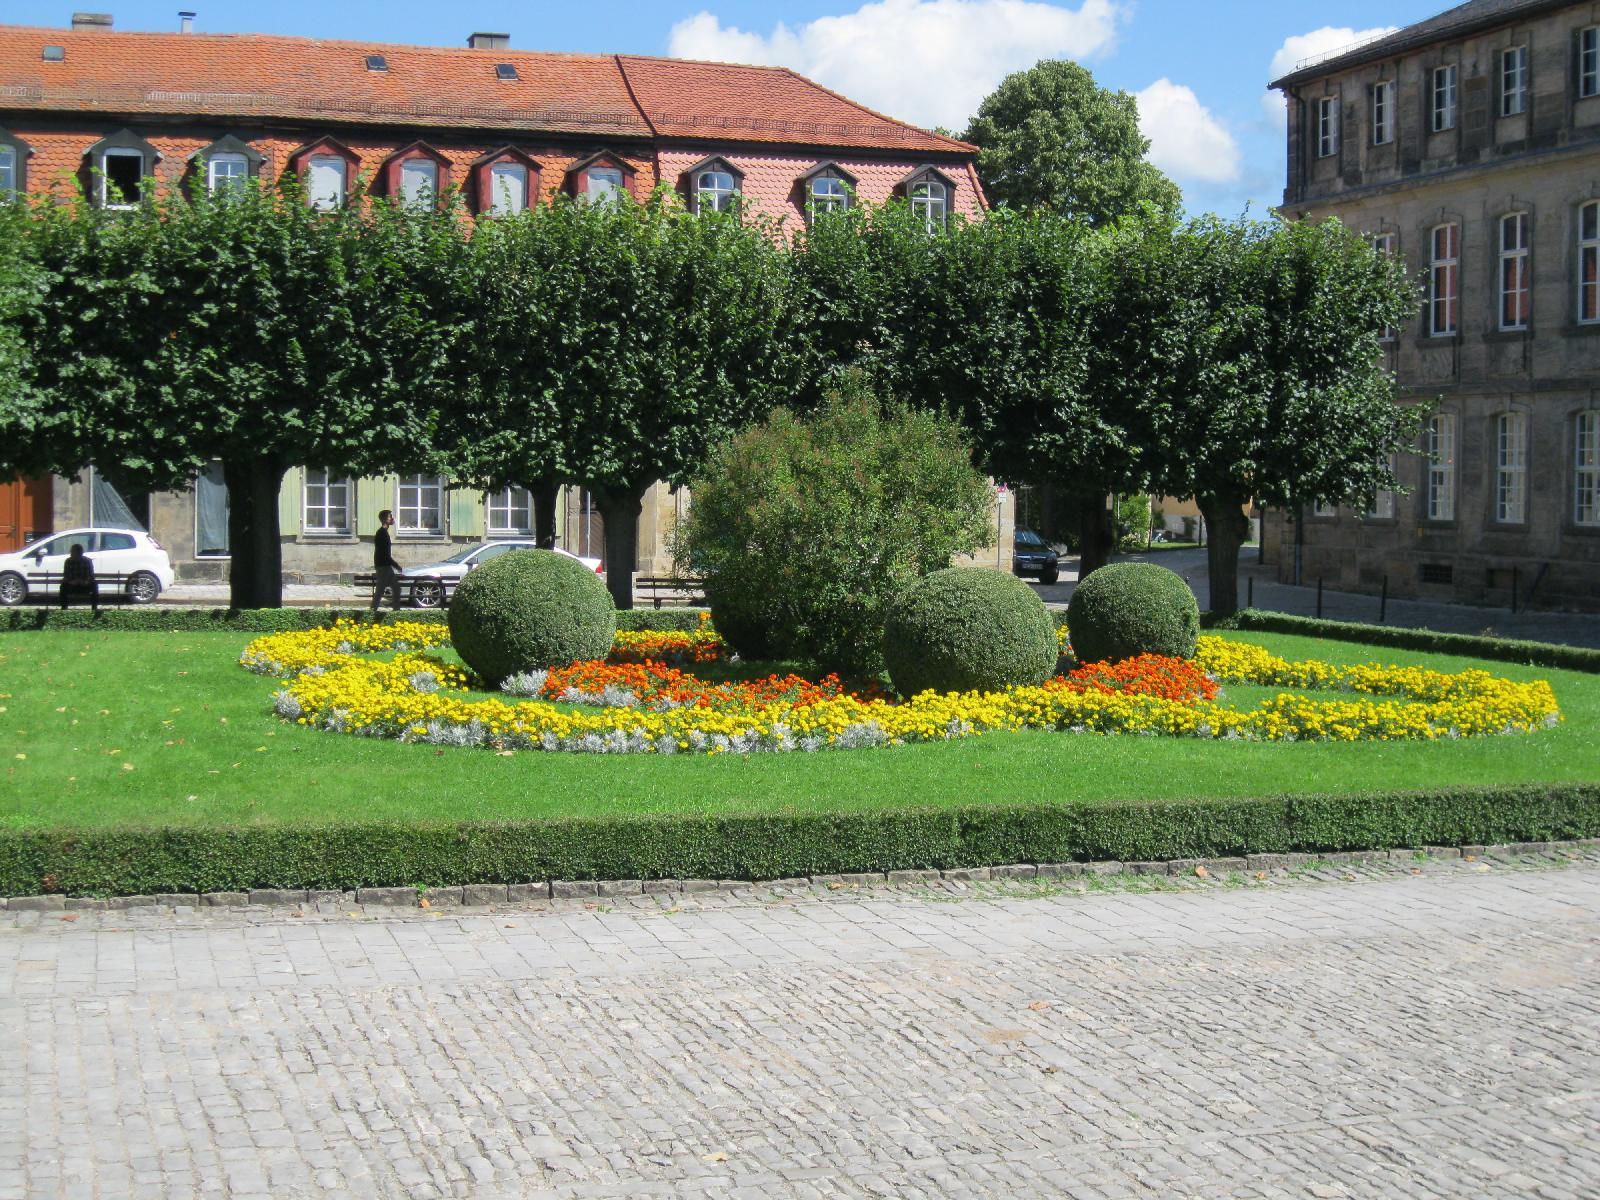 New Palace Courtyard gardens